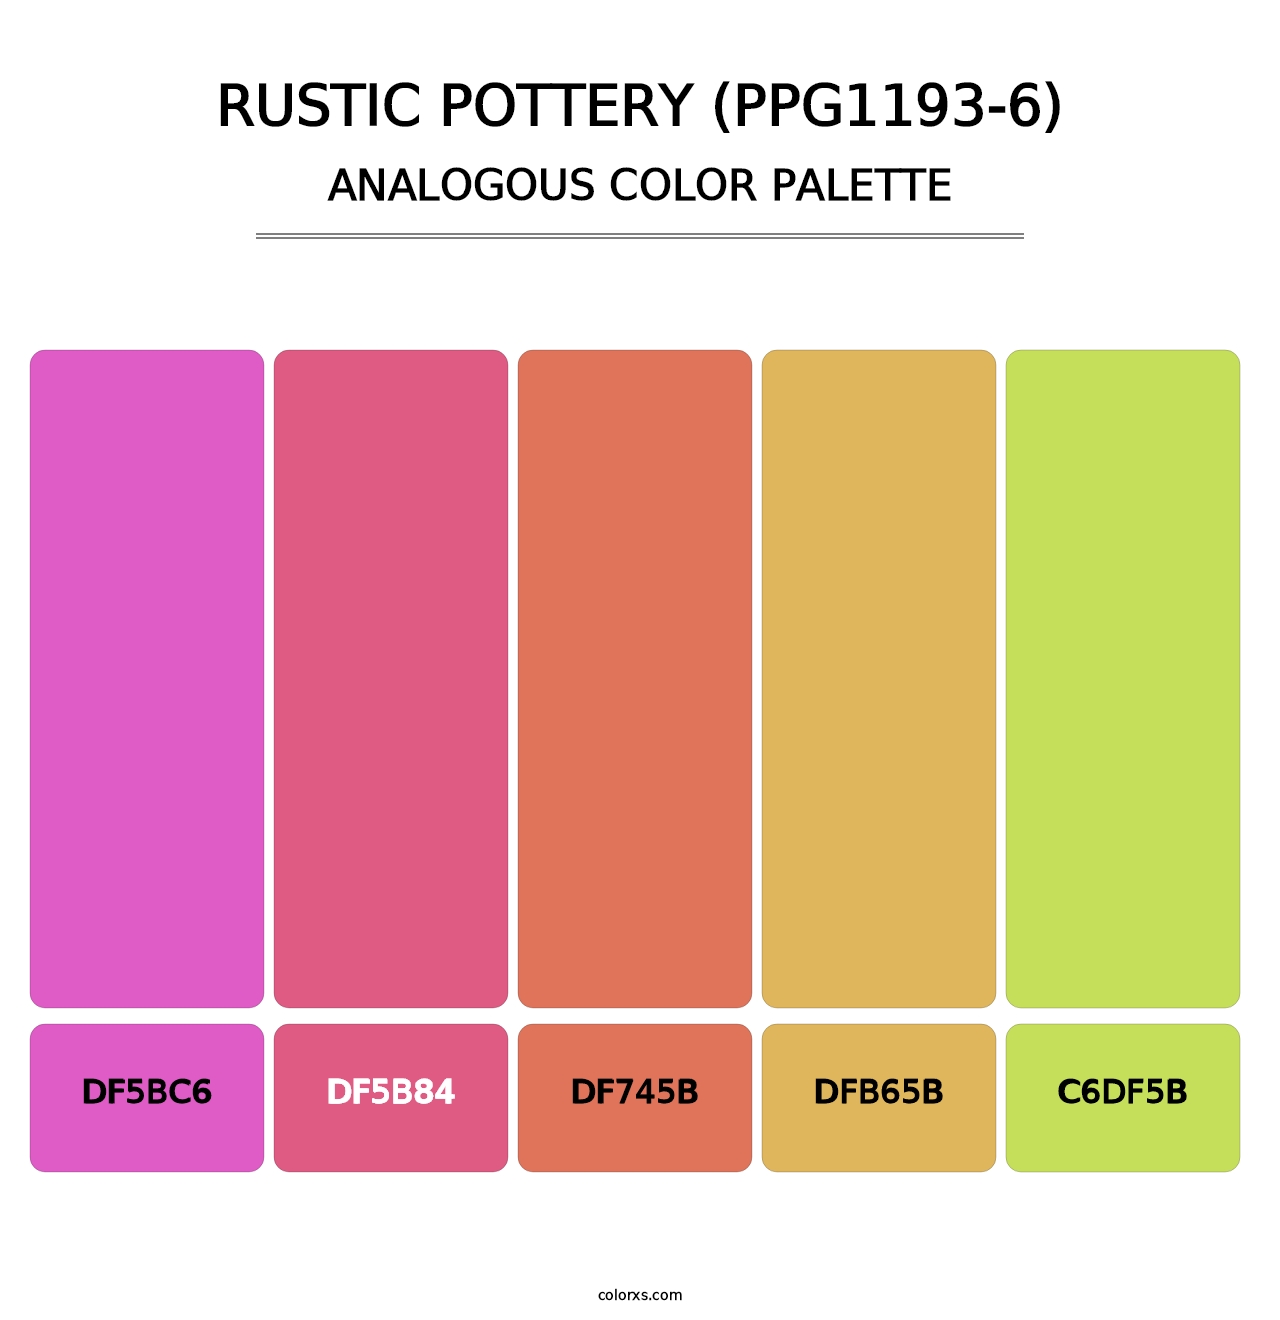 Rustic Pottery (PPG1193-6) - Analogous Color Palette